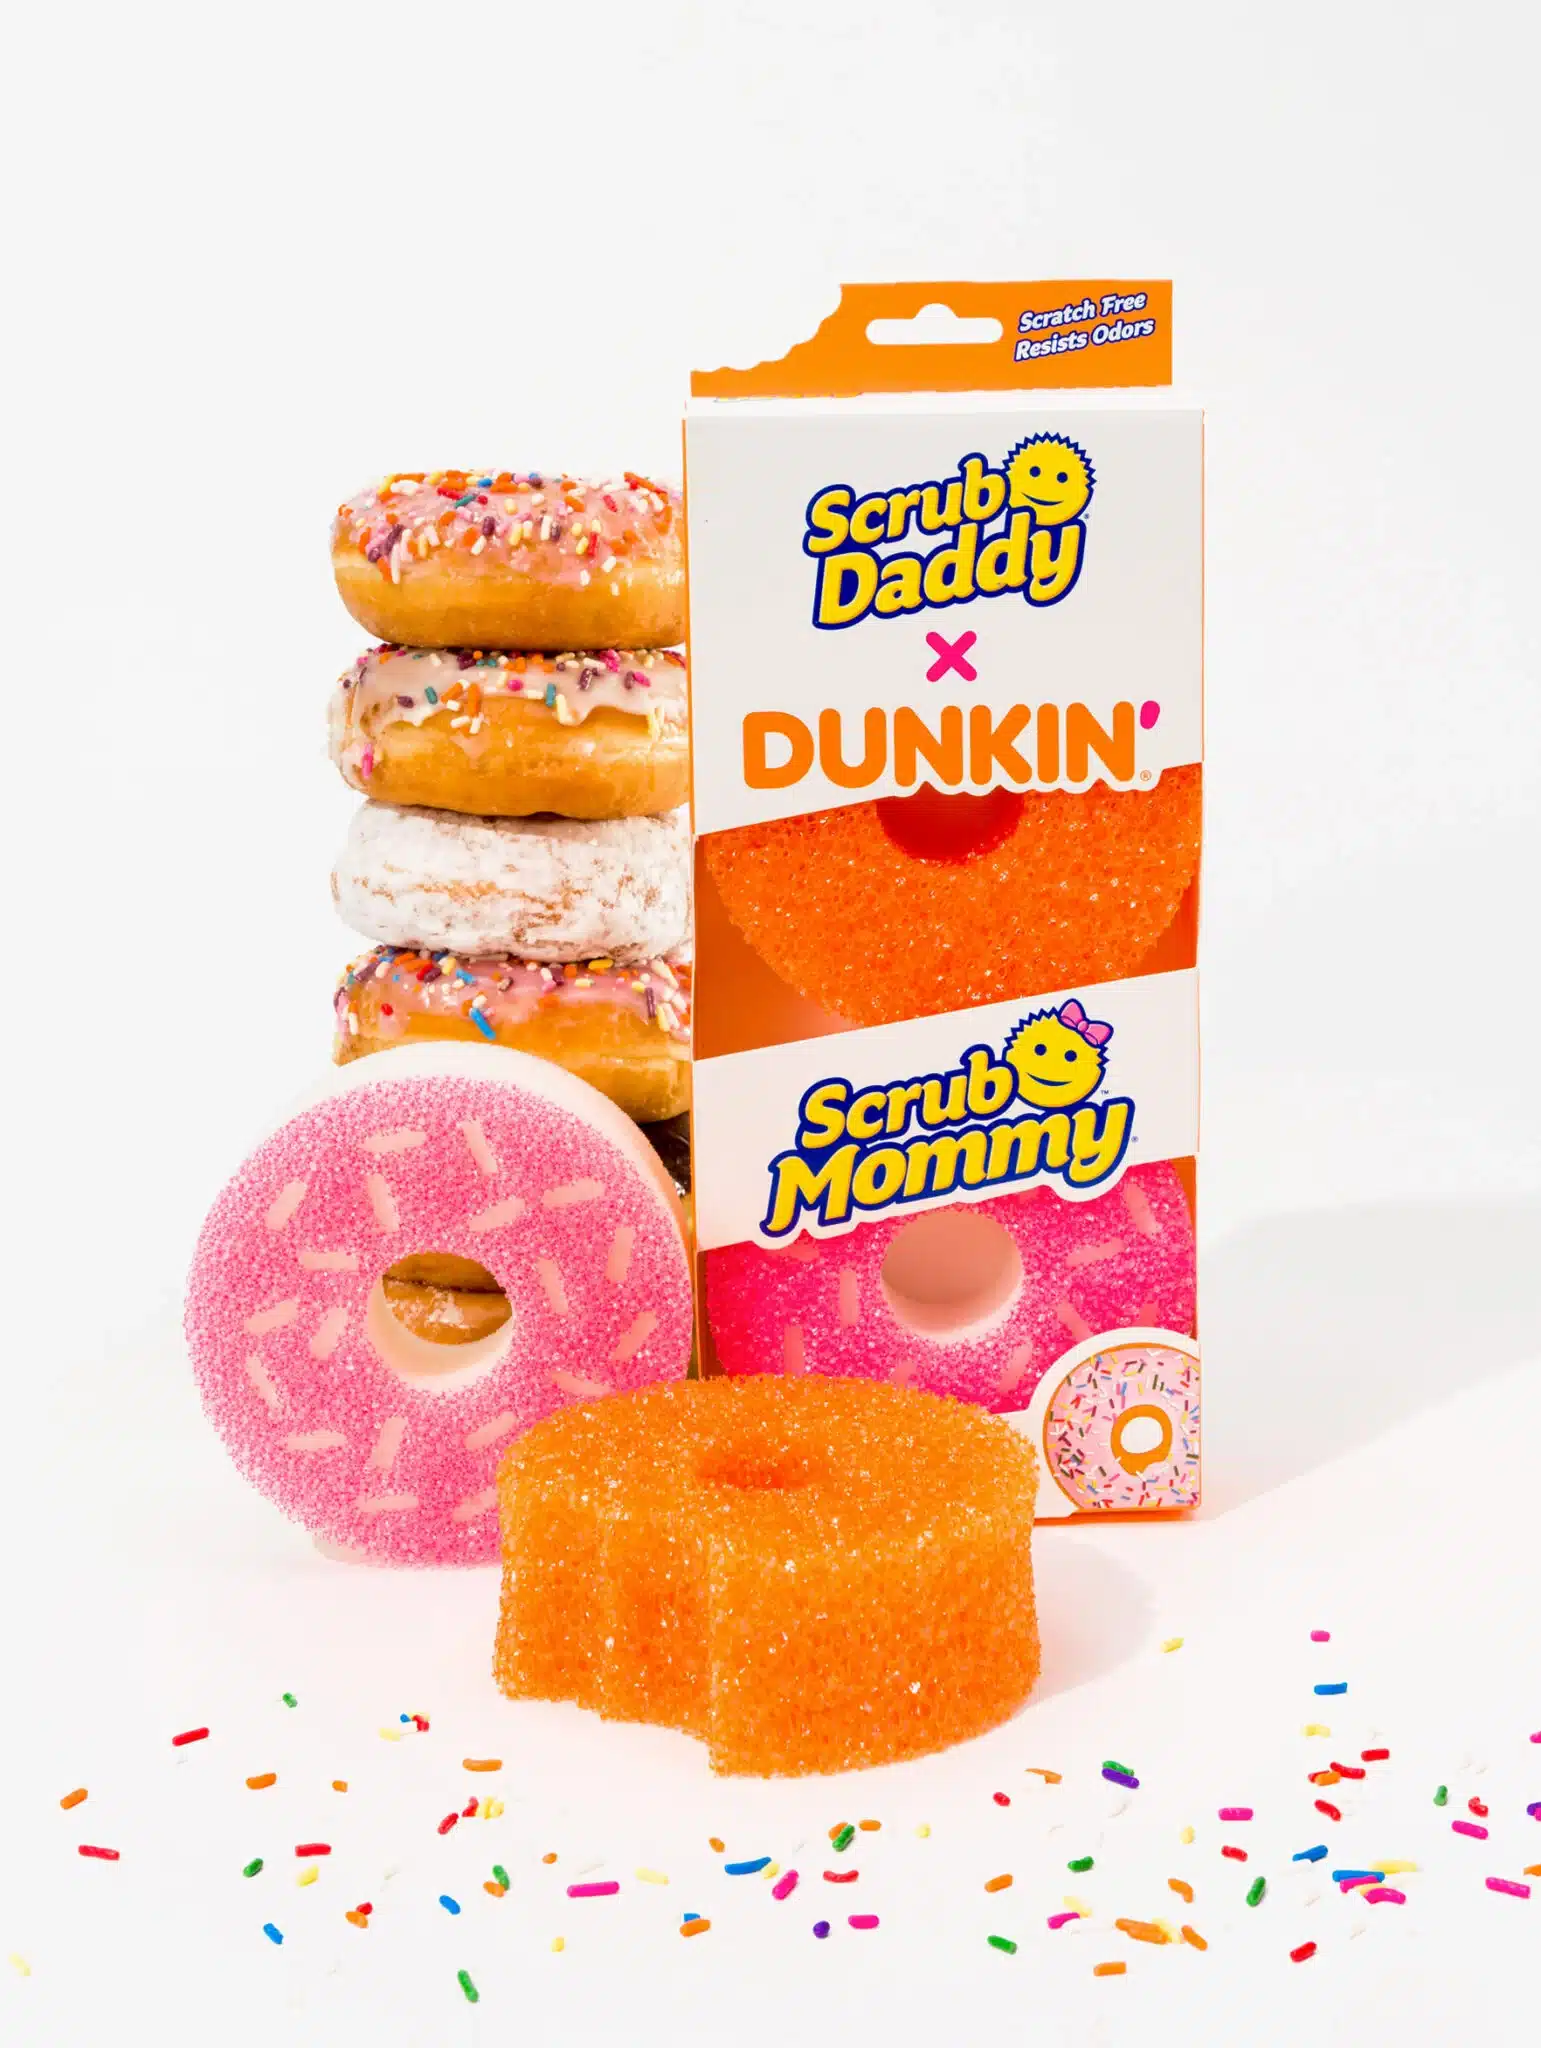 Dunkin’ & Scrub Daddy Limited Edition Product Marketing Image